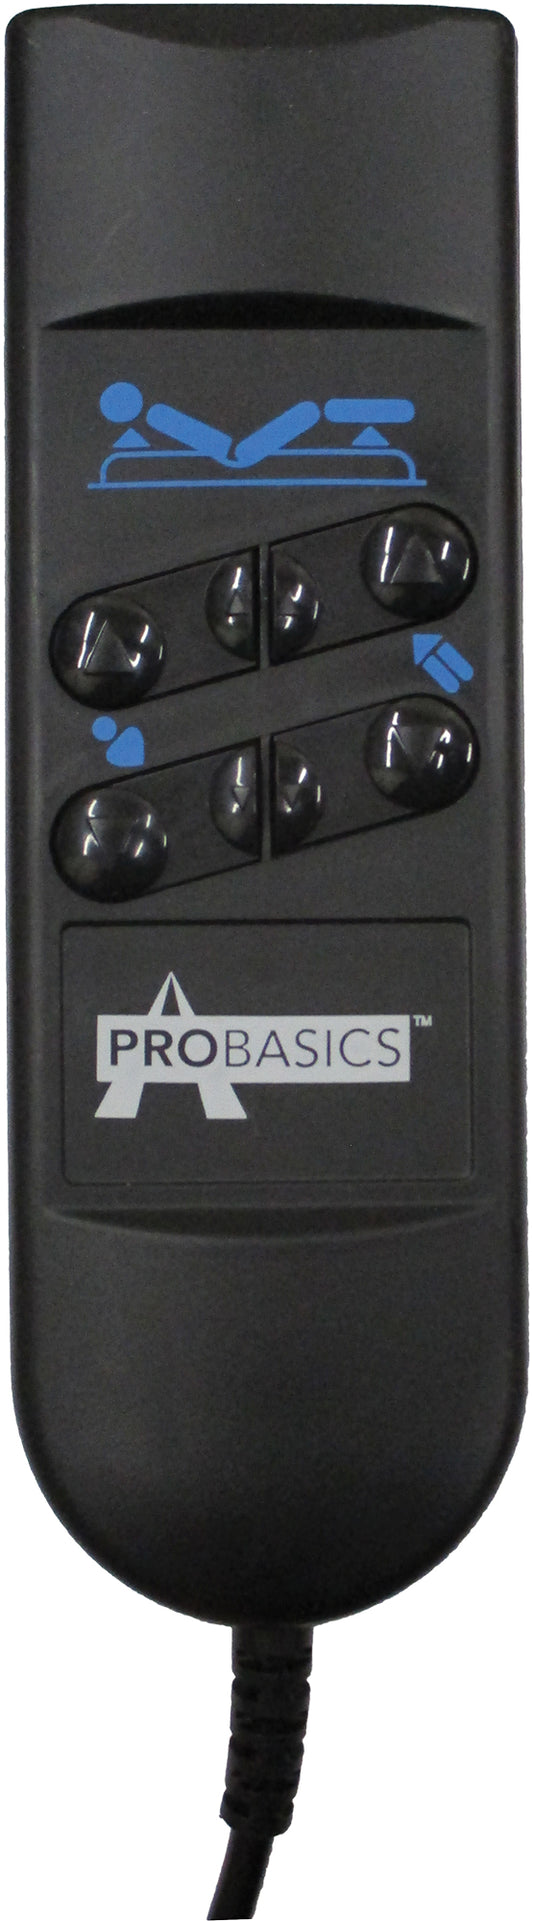 ProBasics PMI Hand Control Pendant